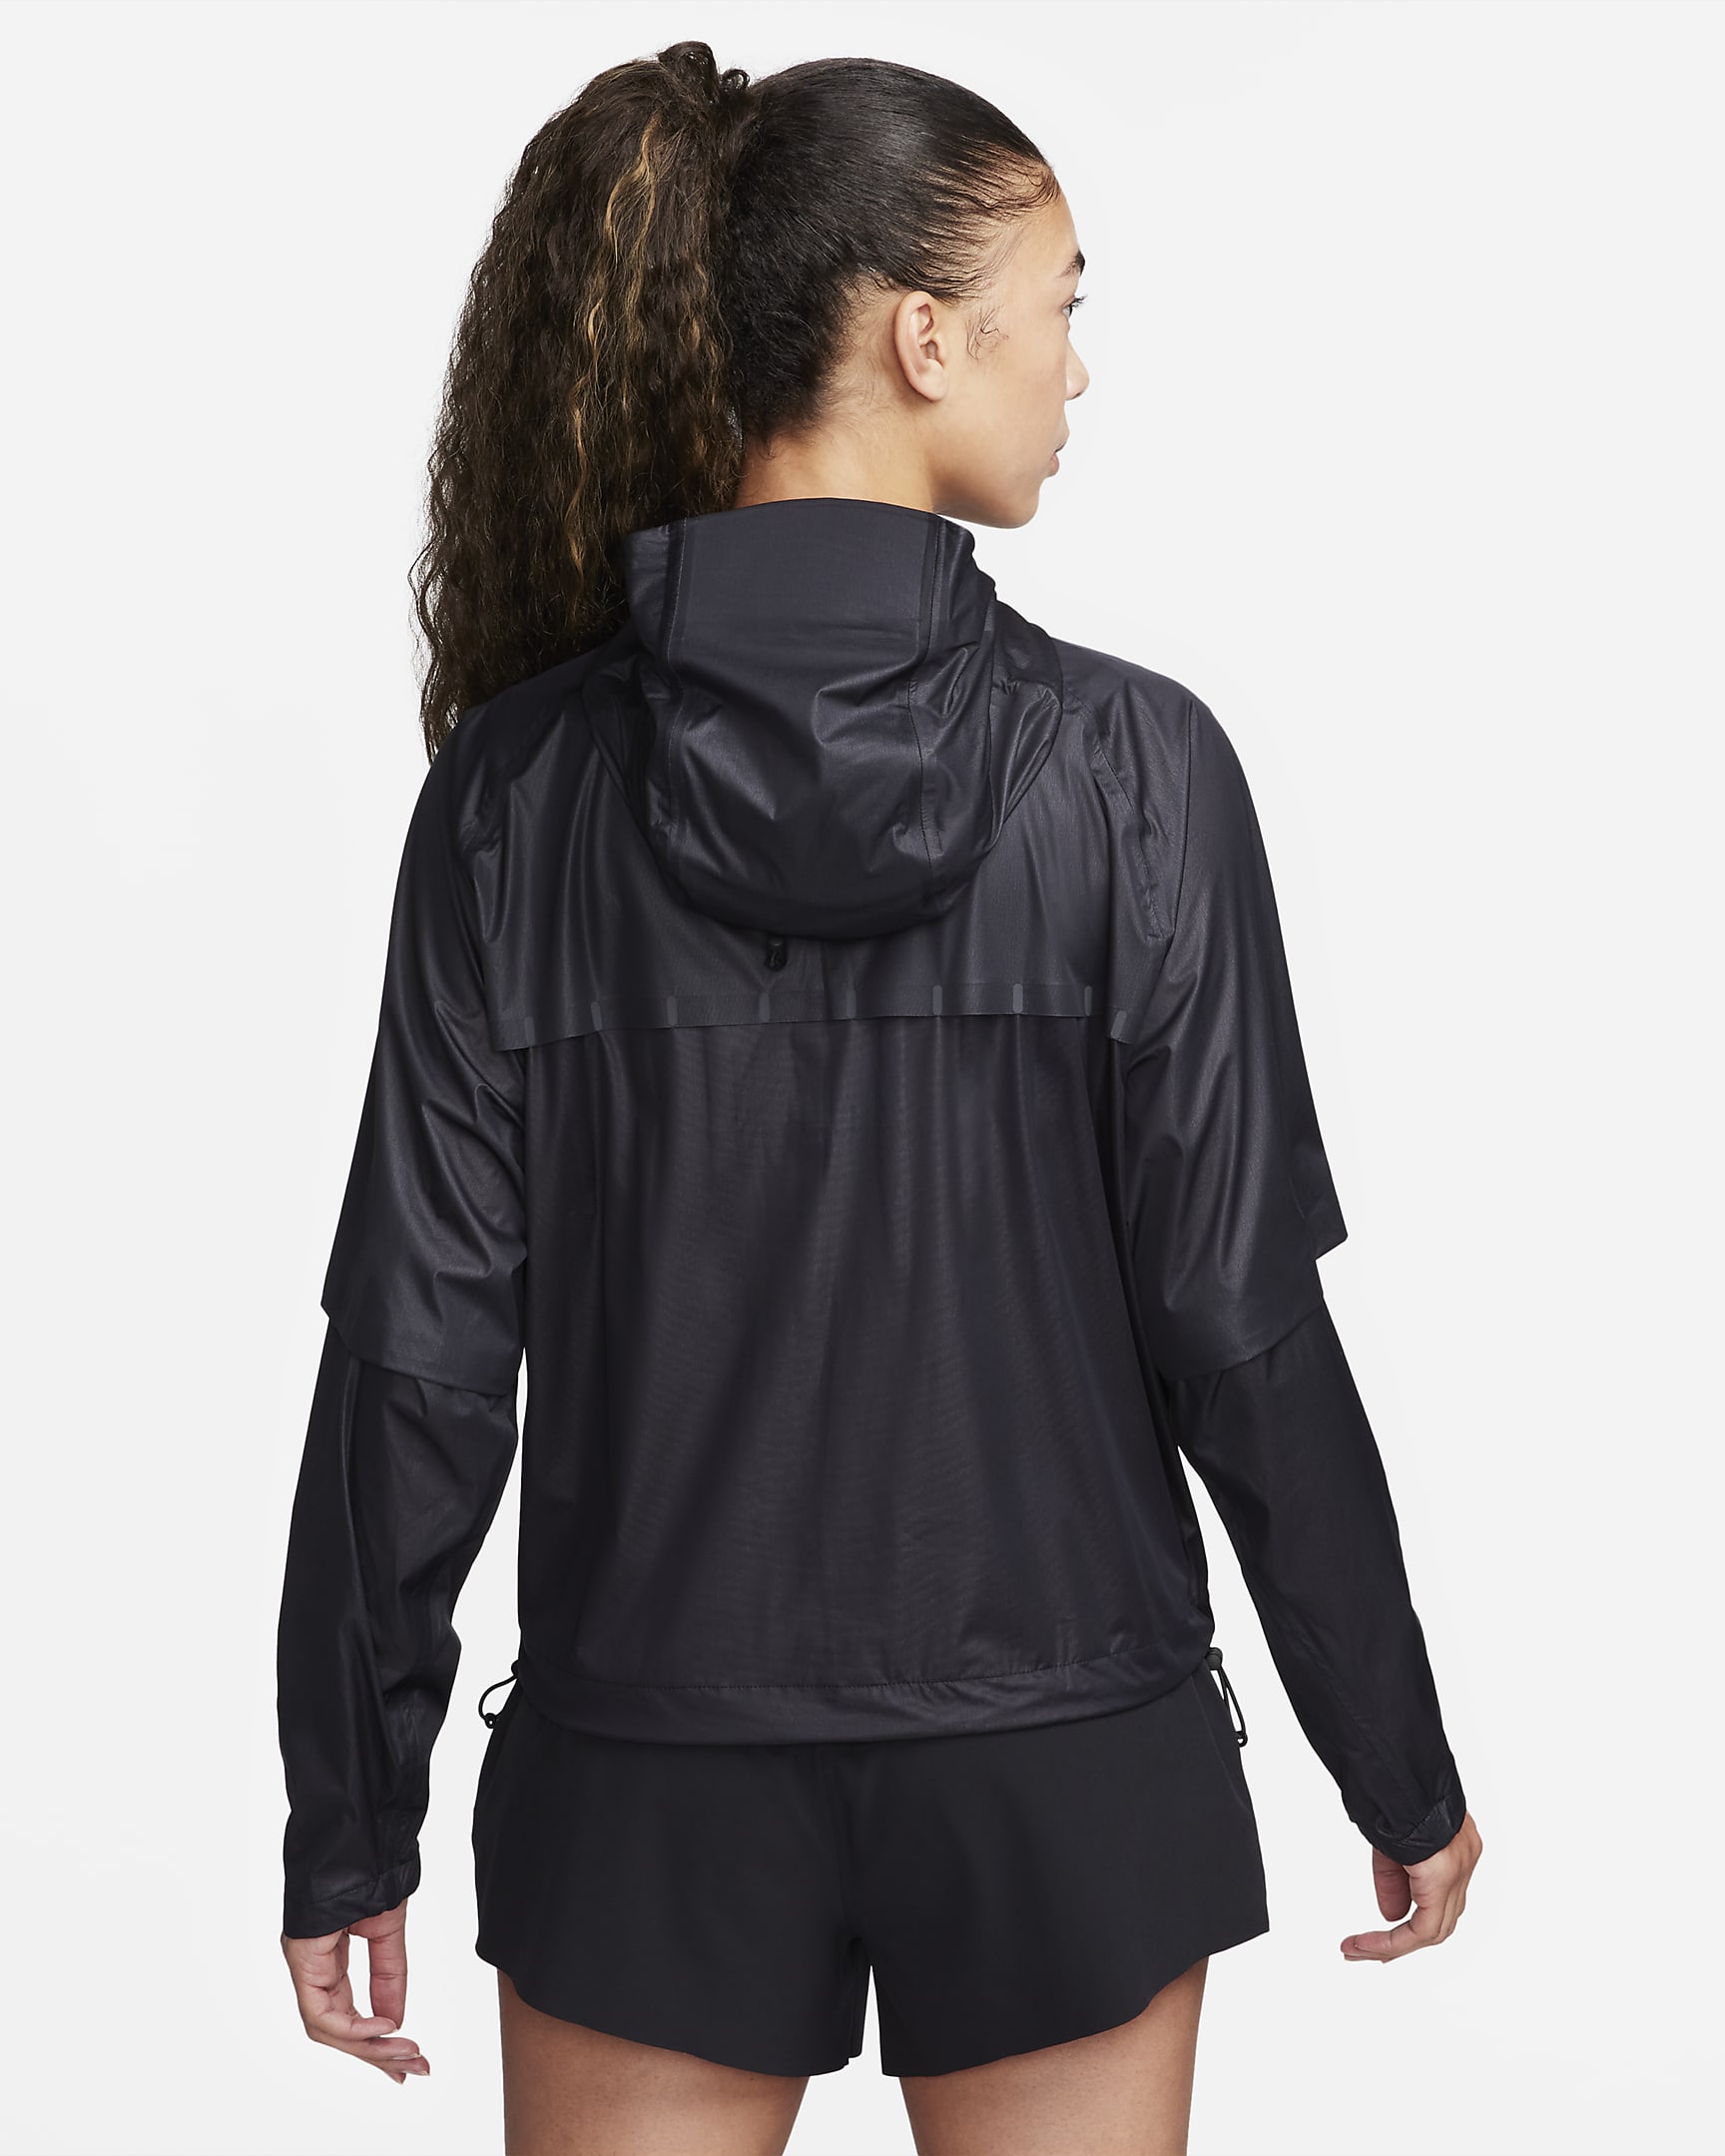 Nike Running Division Aerogami Women's Storm-FIT ADV Jacket. Nike HR